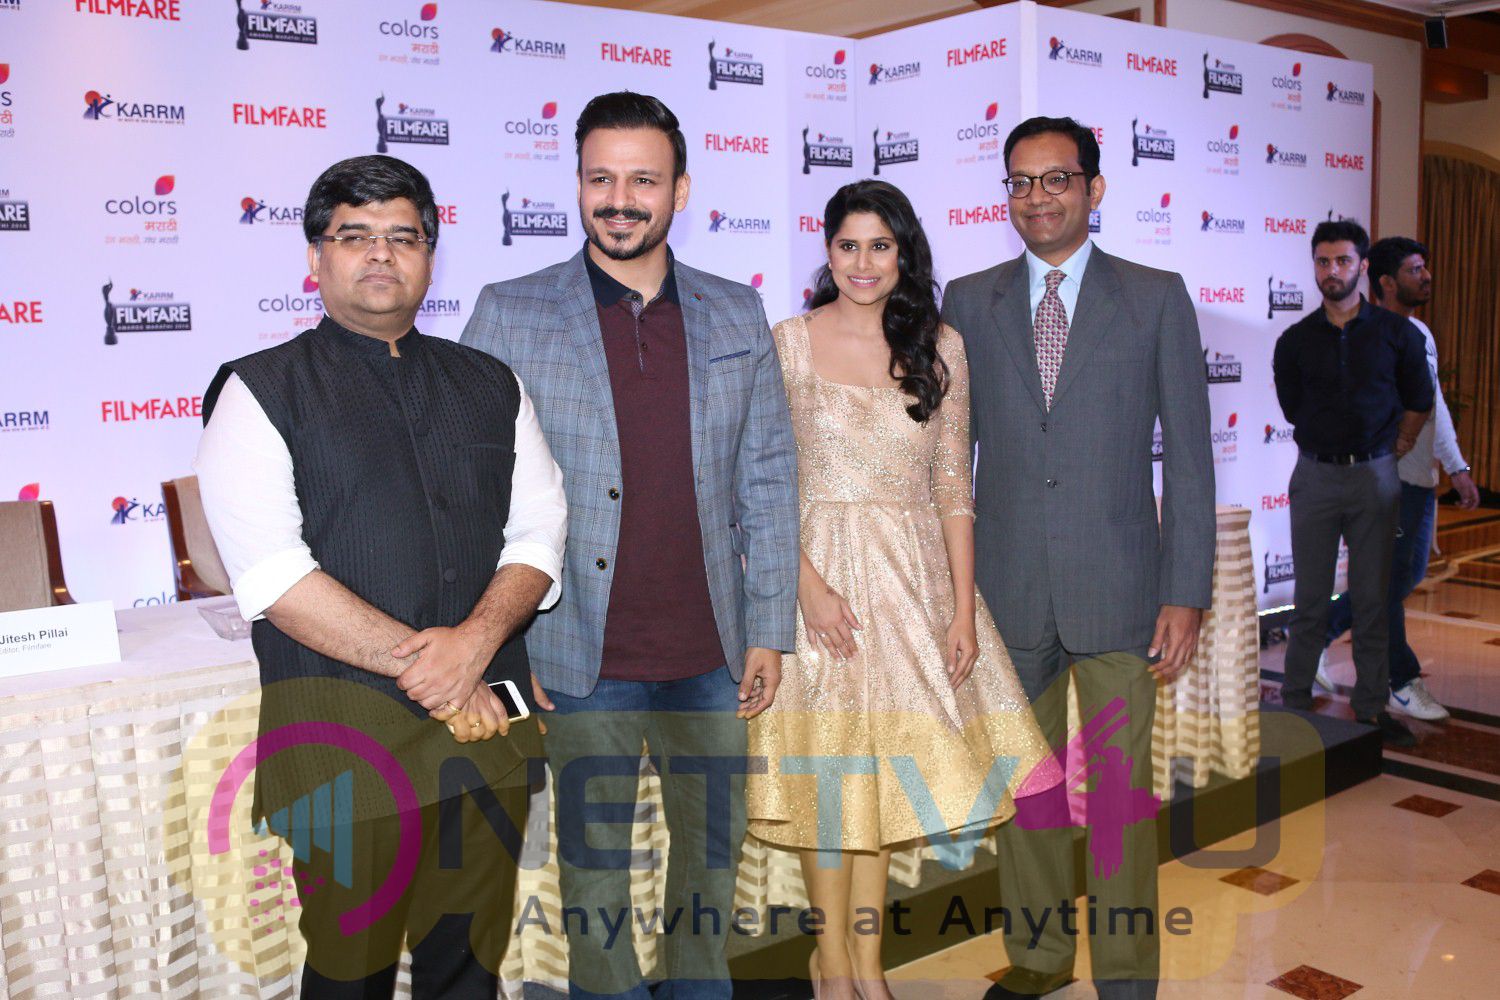 Vivek Oberoi & Sai Tamhankar Announcement Pc Of Filmfare Awards Images Hindi Gallery